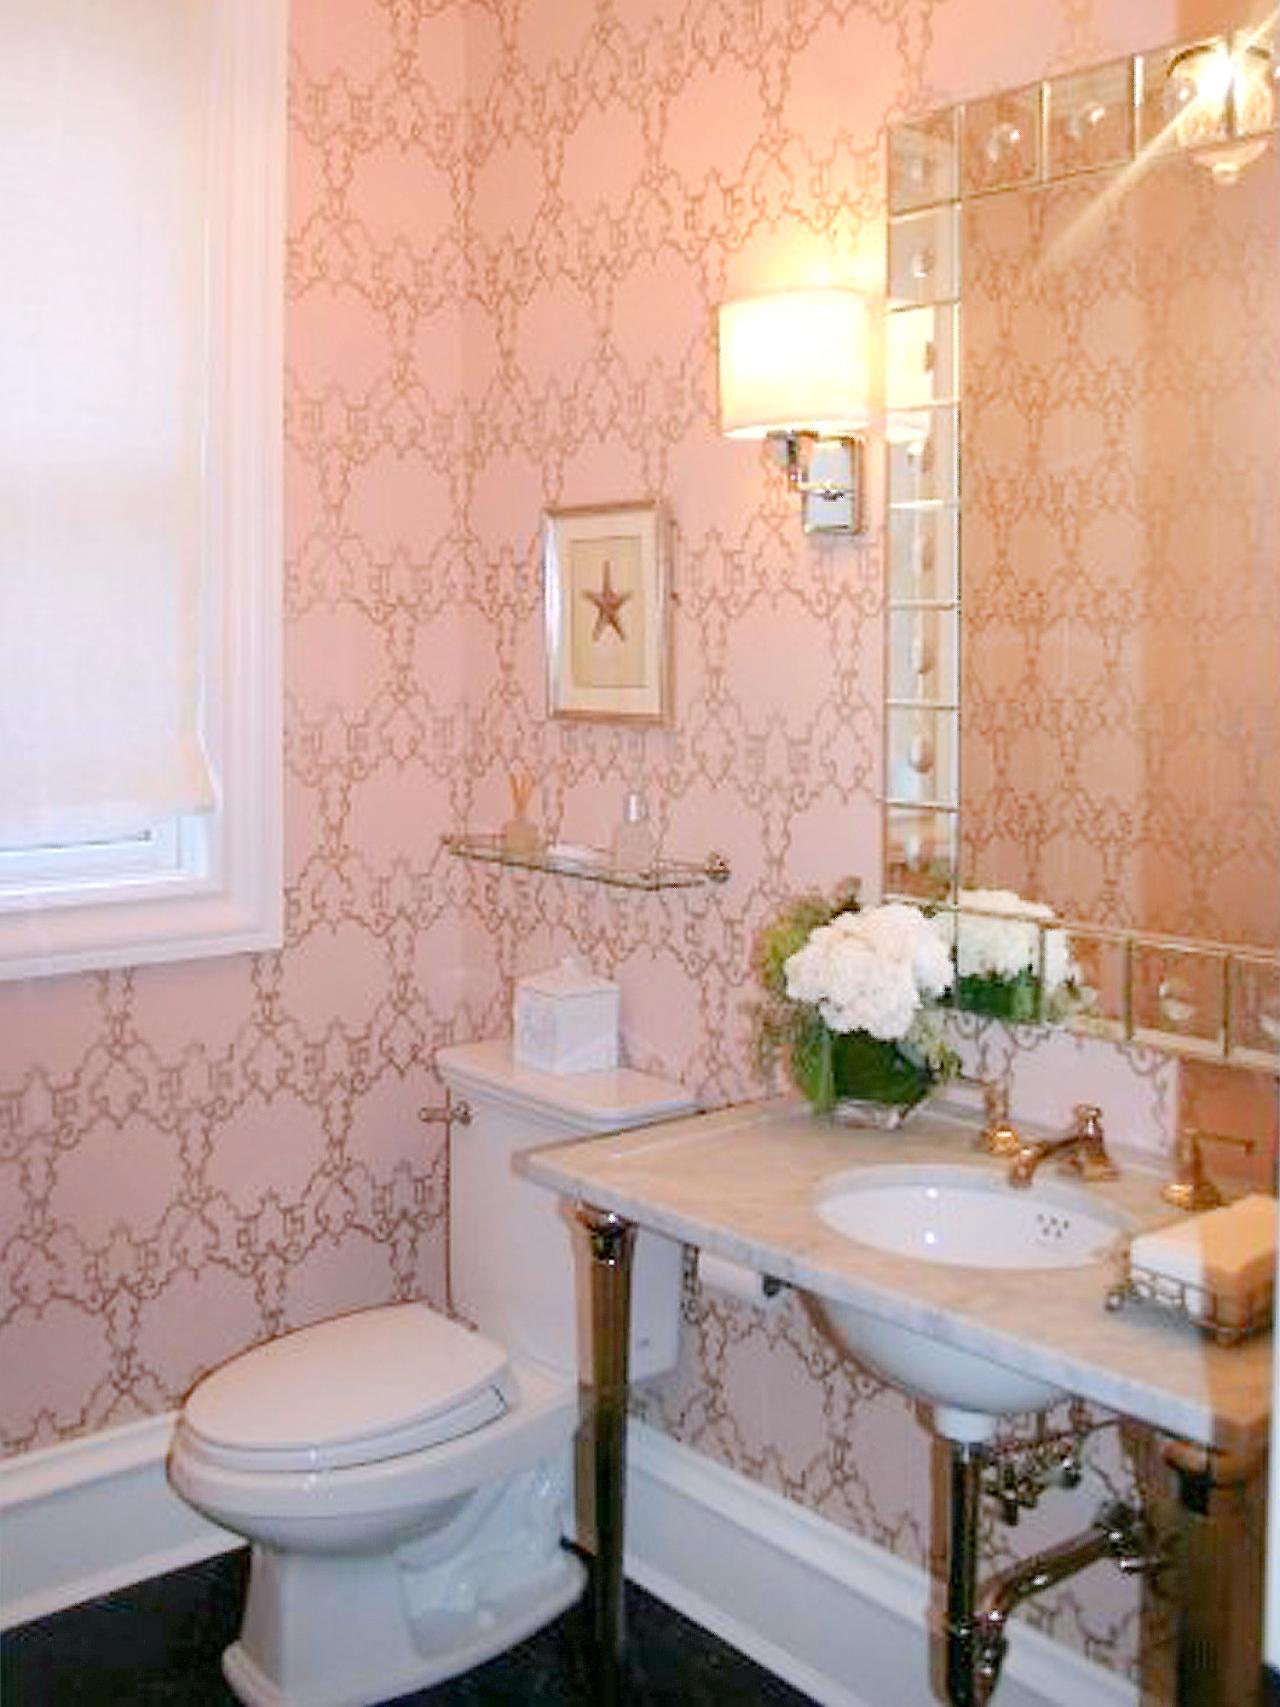 Reasons to Love Retro Pink-Tiled Bathrooms | HGTV's ...